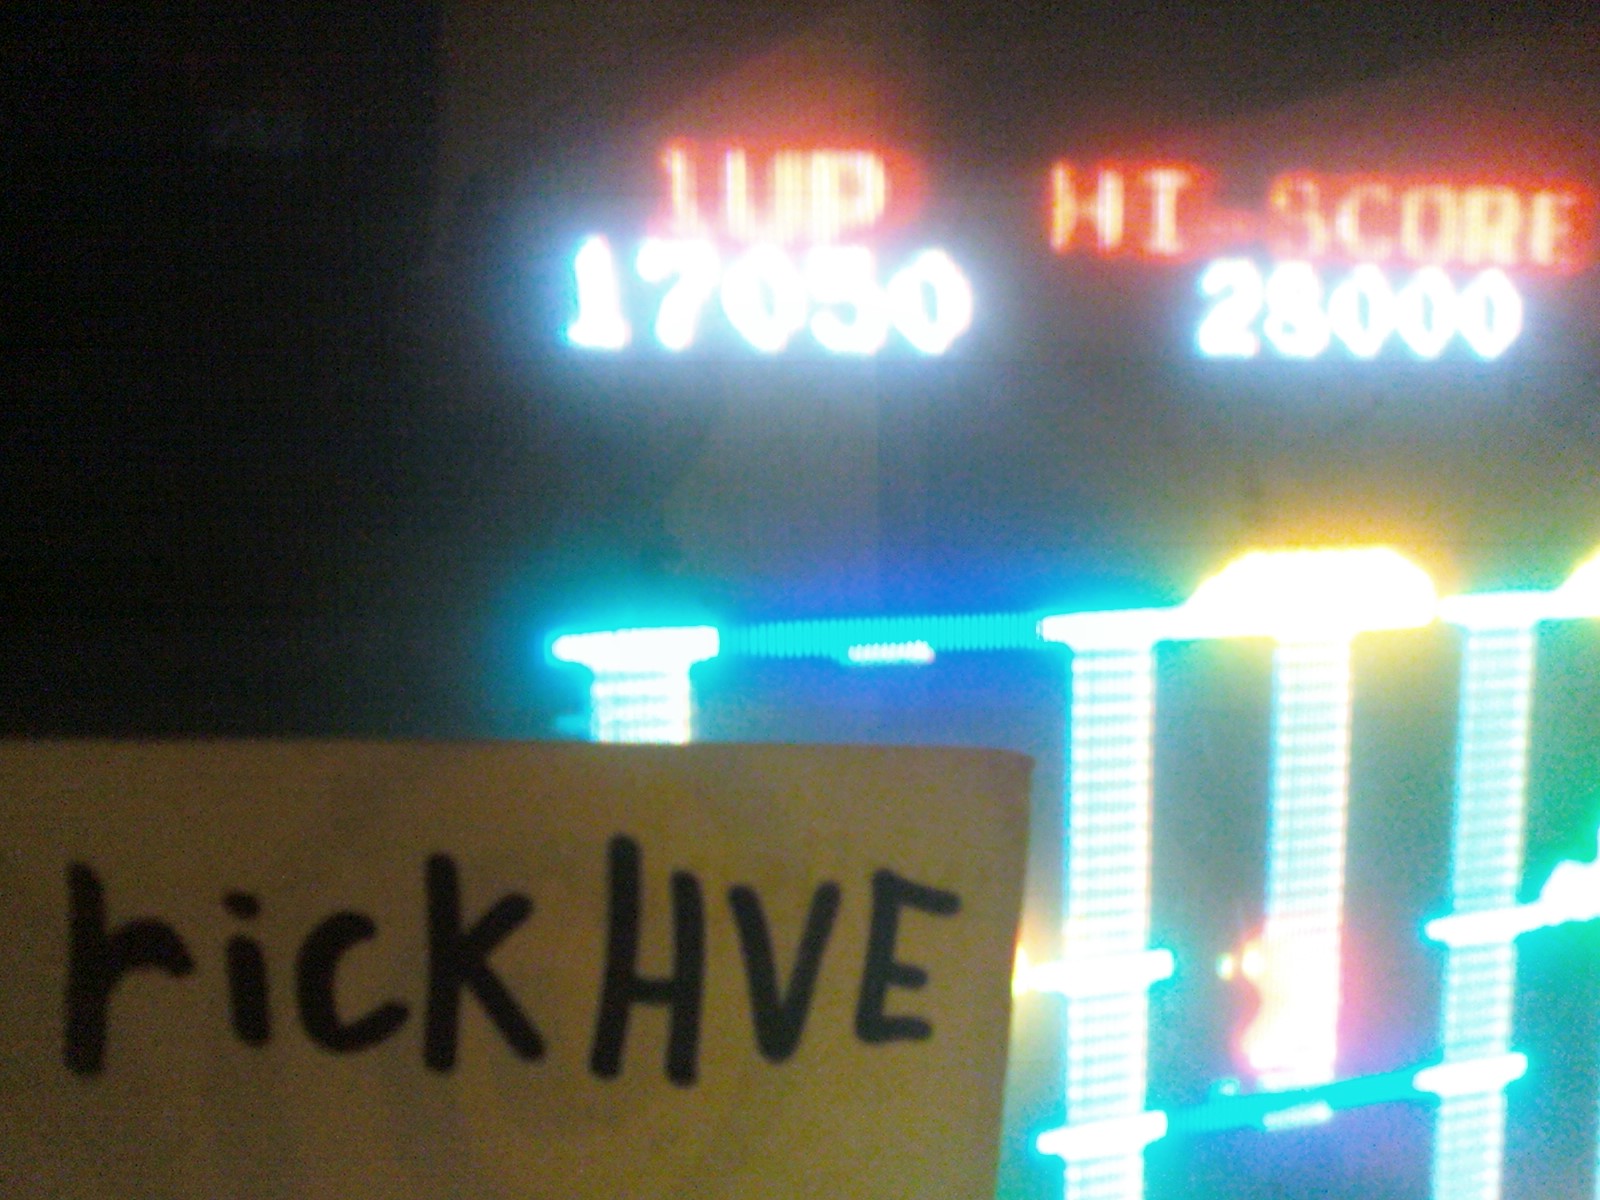 ErickHVE: BurgerTime (Arcade Emulated / M.A.M.E.) 17,050 points on 2014-04-02 12:04:42